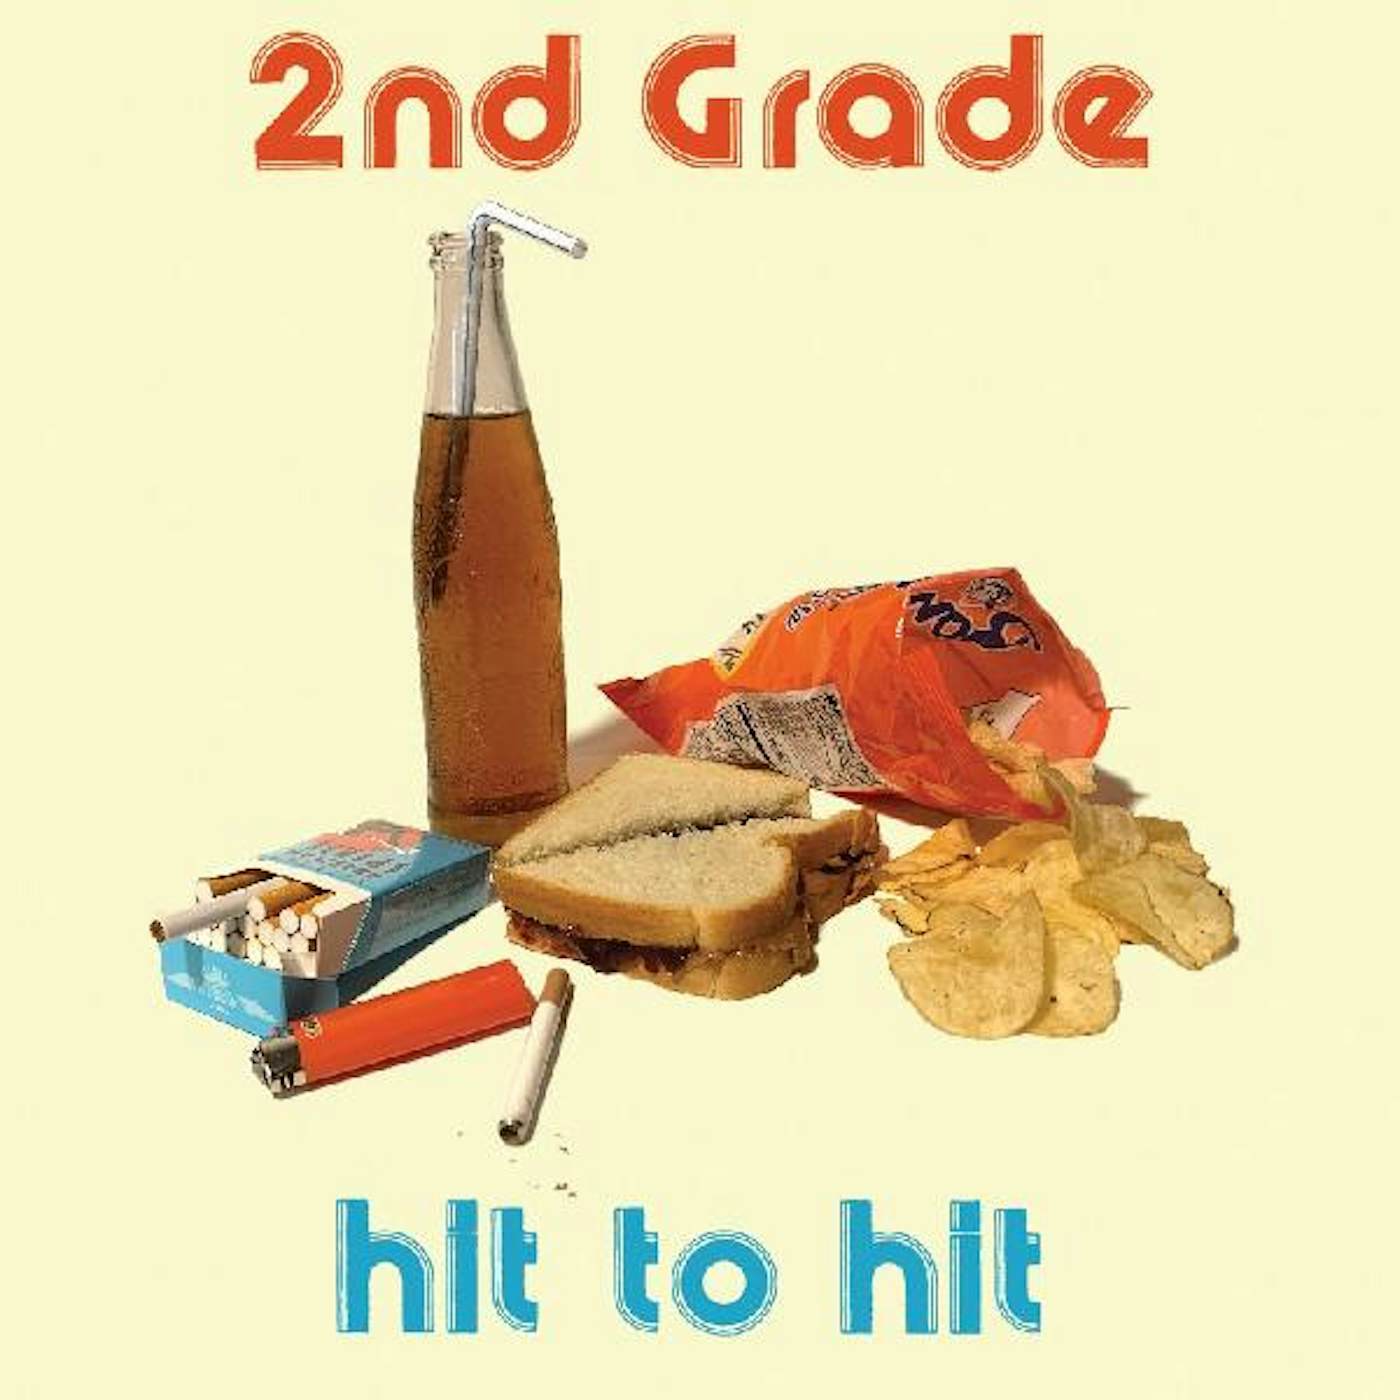 2nd Grade Hit to Hit Vinyl Record